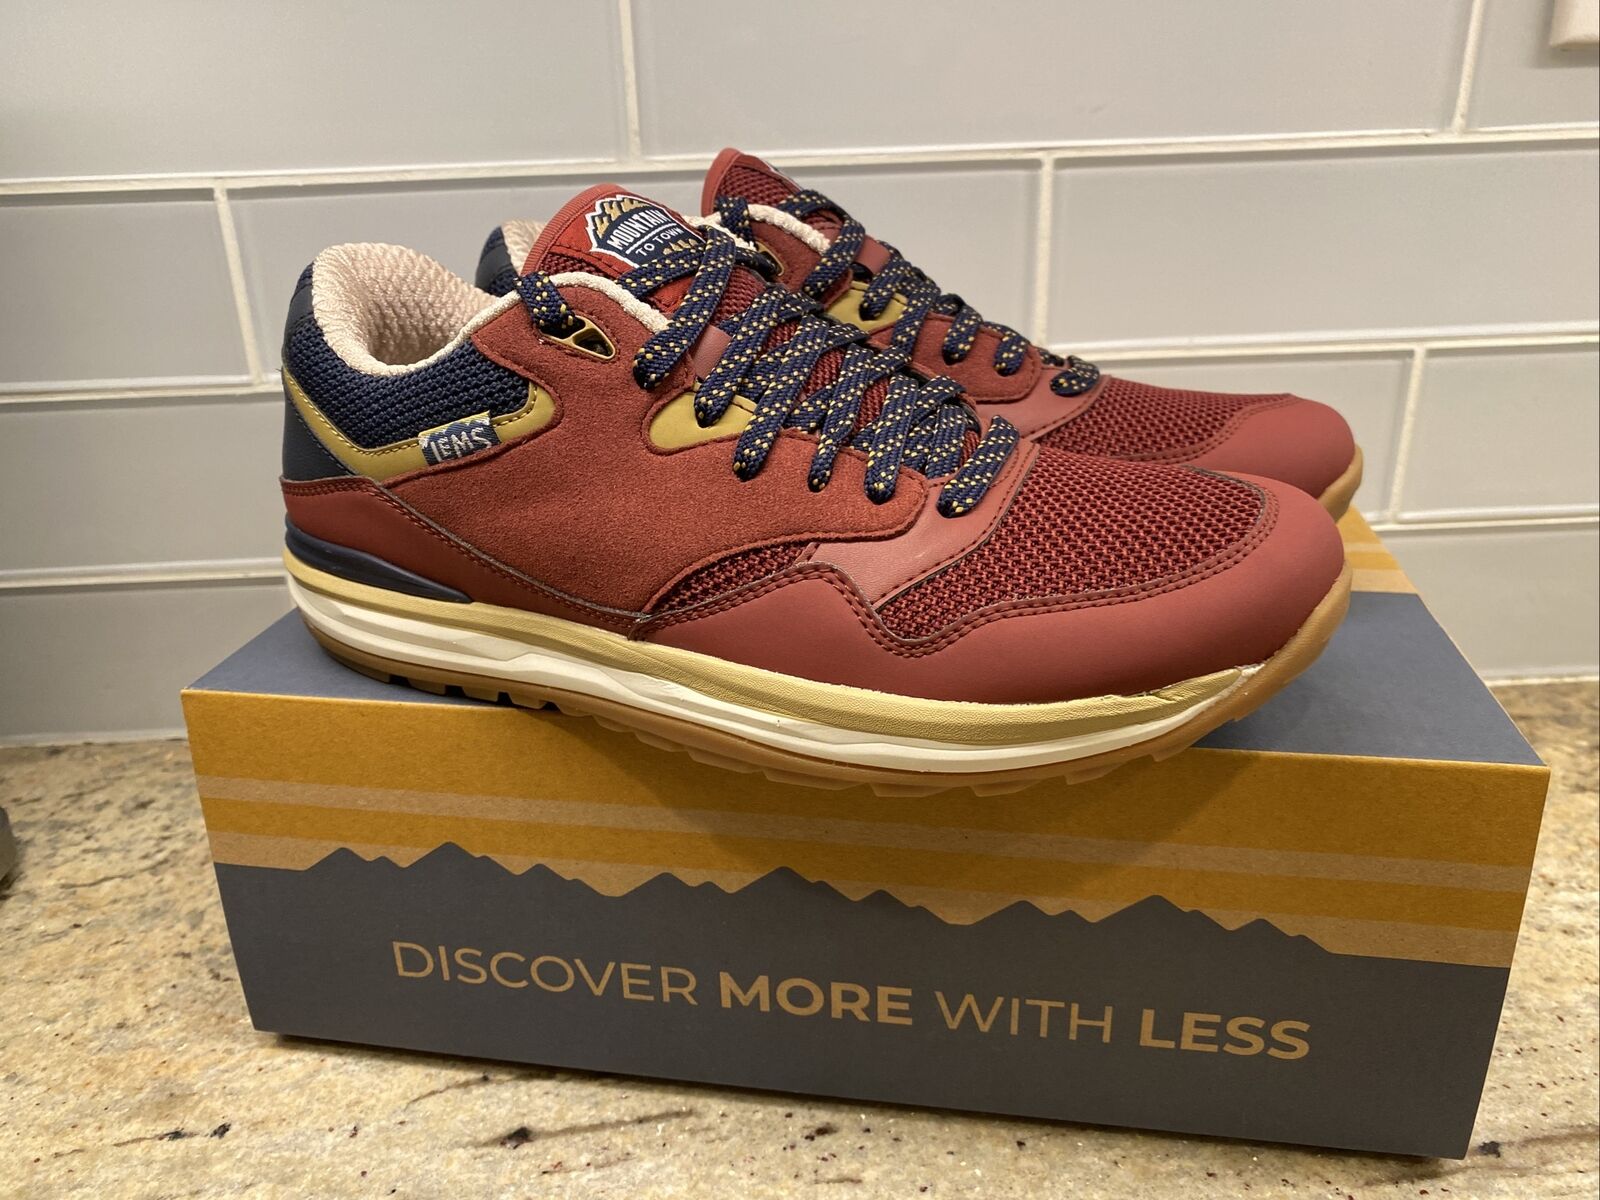 Lems Trailhead Redwood Mountain Sneakers Hiking Shoes Men’s Size 7 D